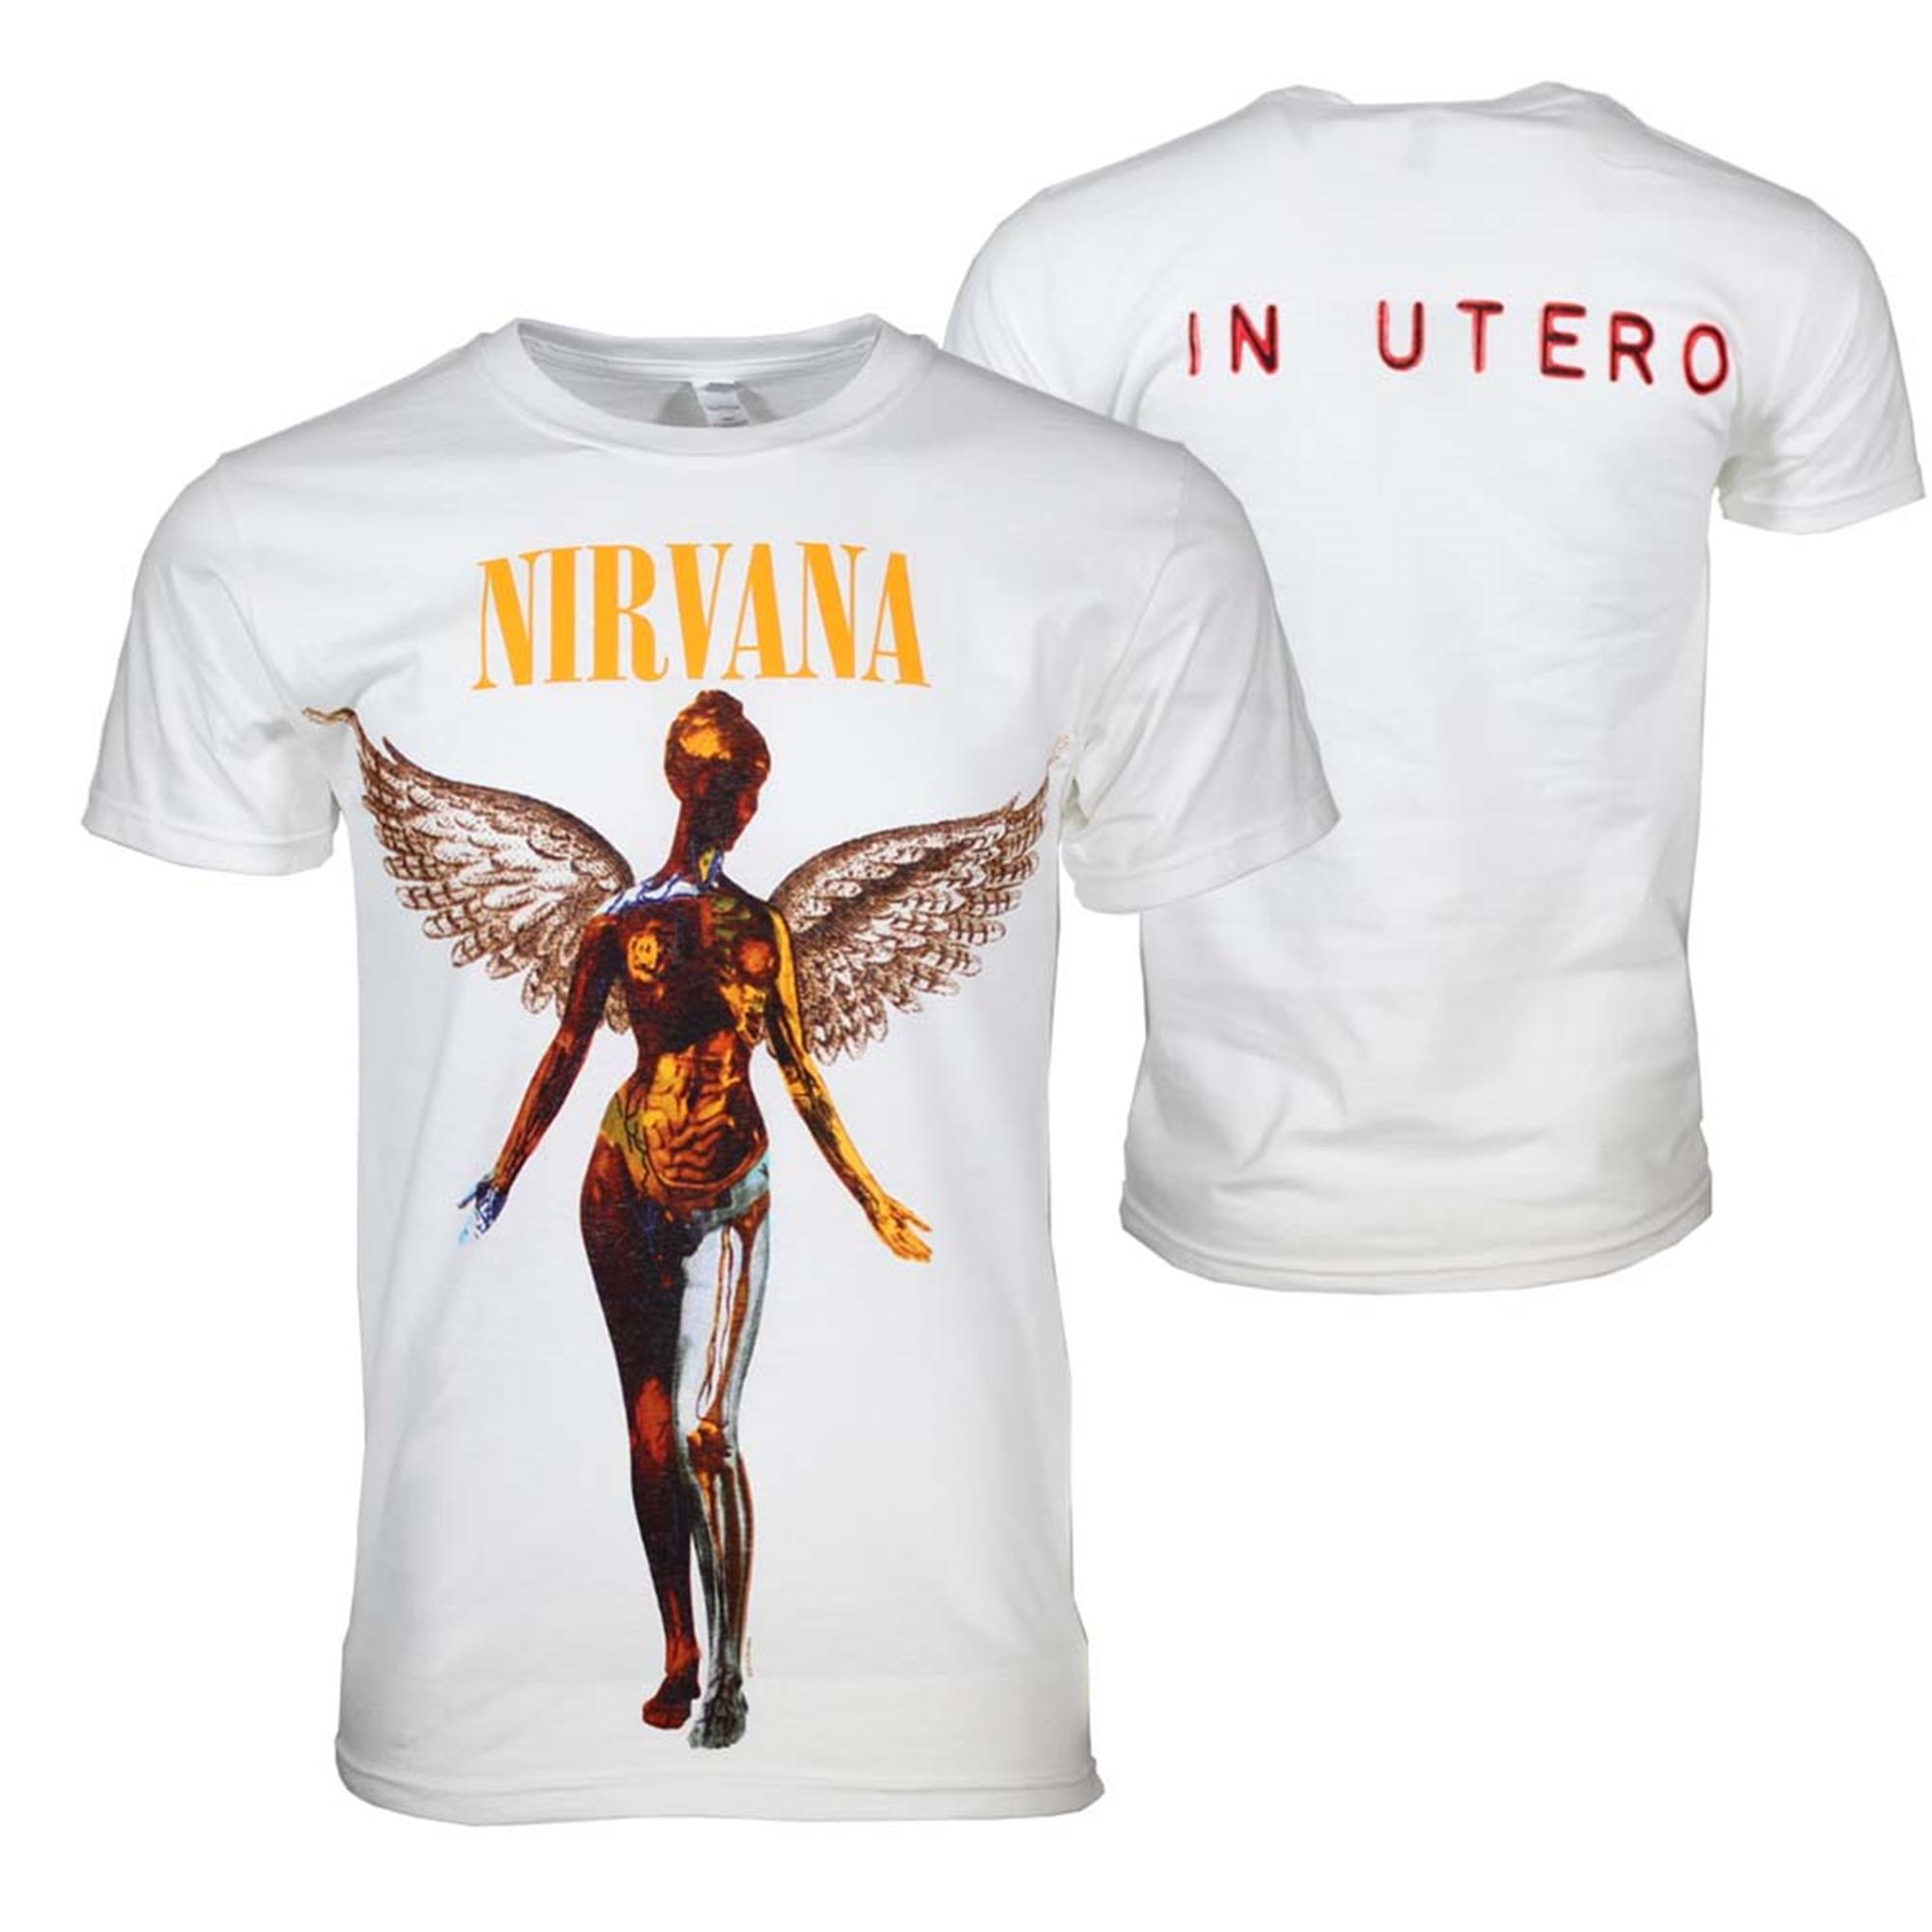 Nirvana t. Футболка Нирвана in utero. In utero Nirvana футболка мужская. Nirvana in utero майка. Футболка Курт Кобейн in utero.